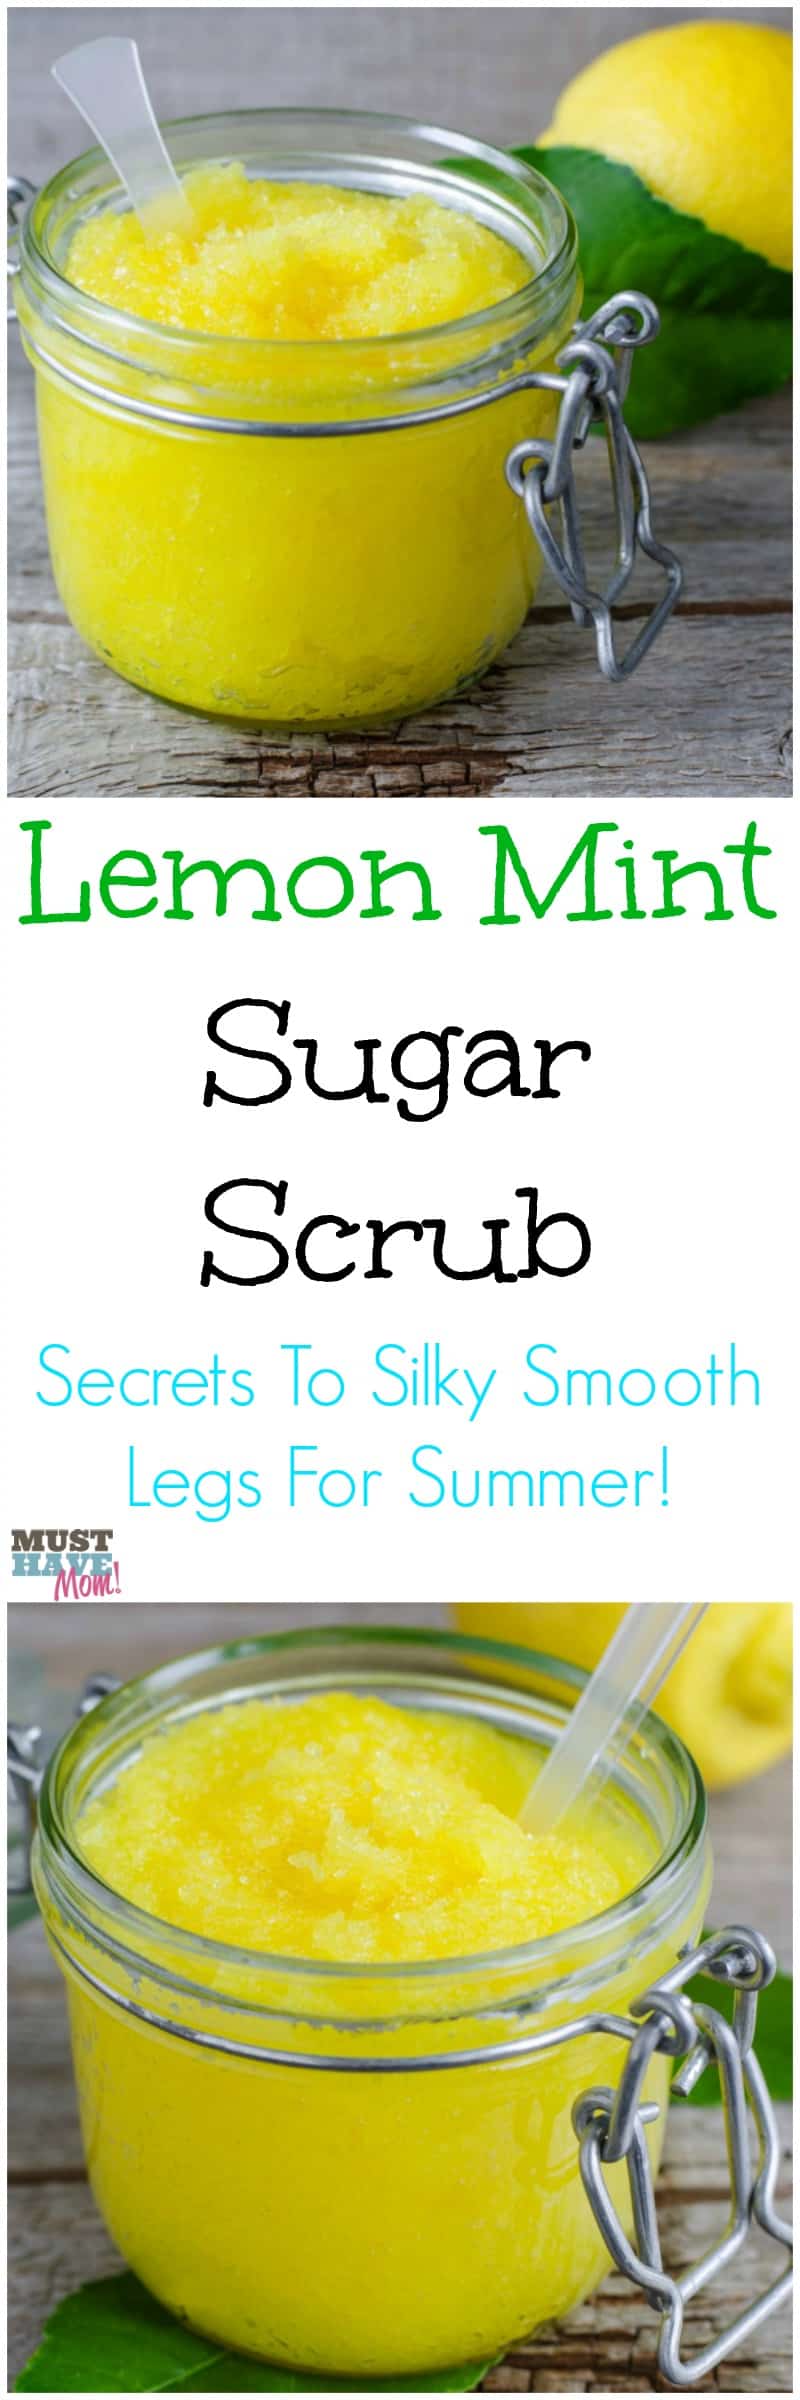 Secrets to silky smooth legs for summer + lemon mint sugar scrub recipe and shaving tips! Love this natural shave scrub recipe! It woks so amazingly!!